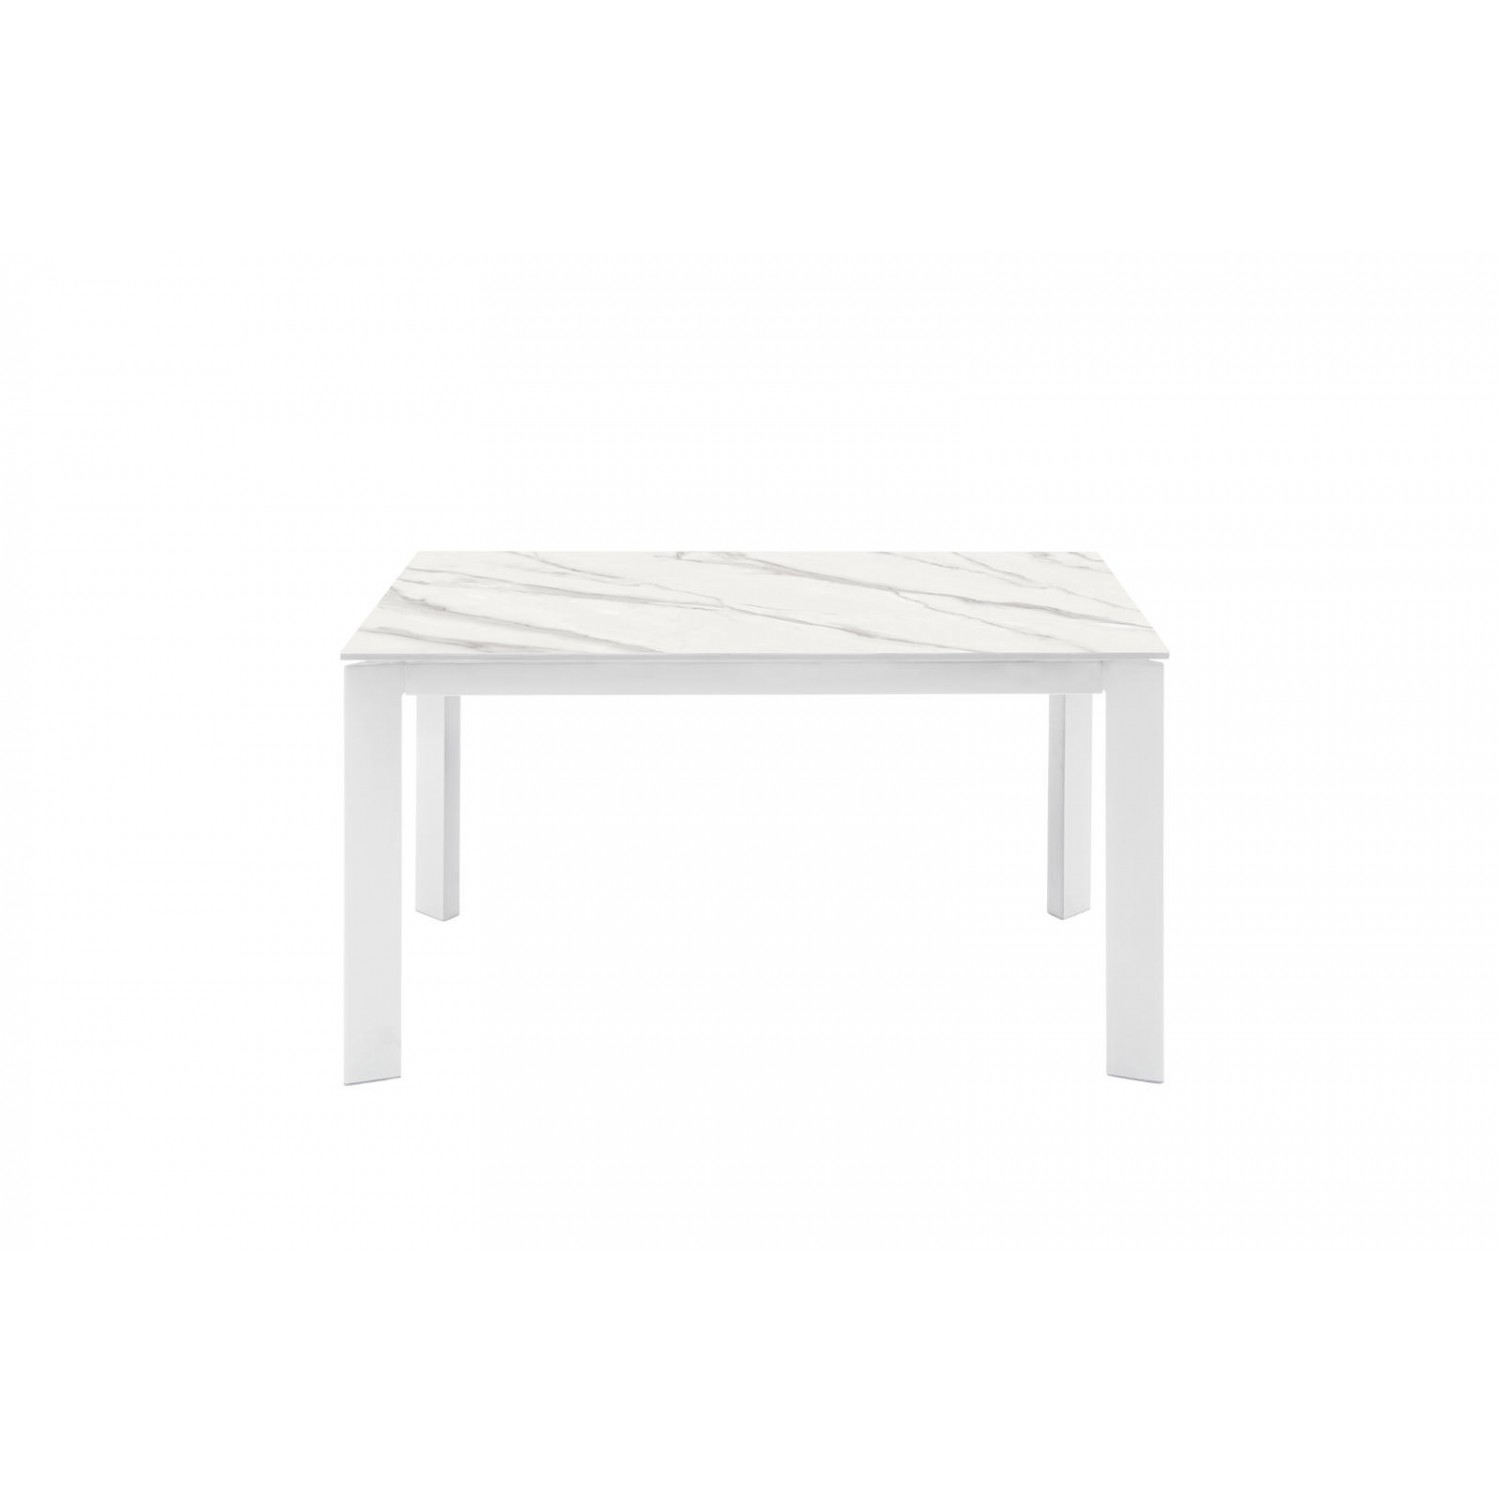 design twist tavolo allungabile (140/200 x 90 cm) david